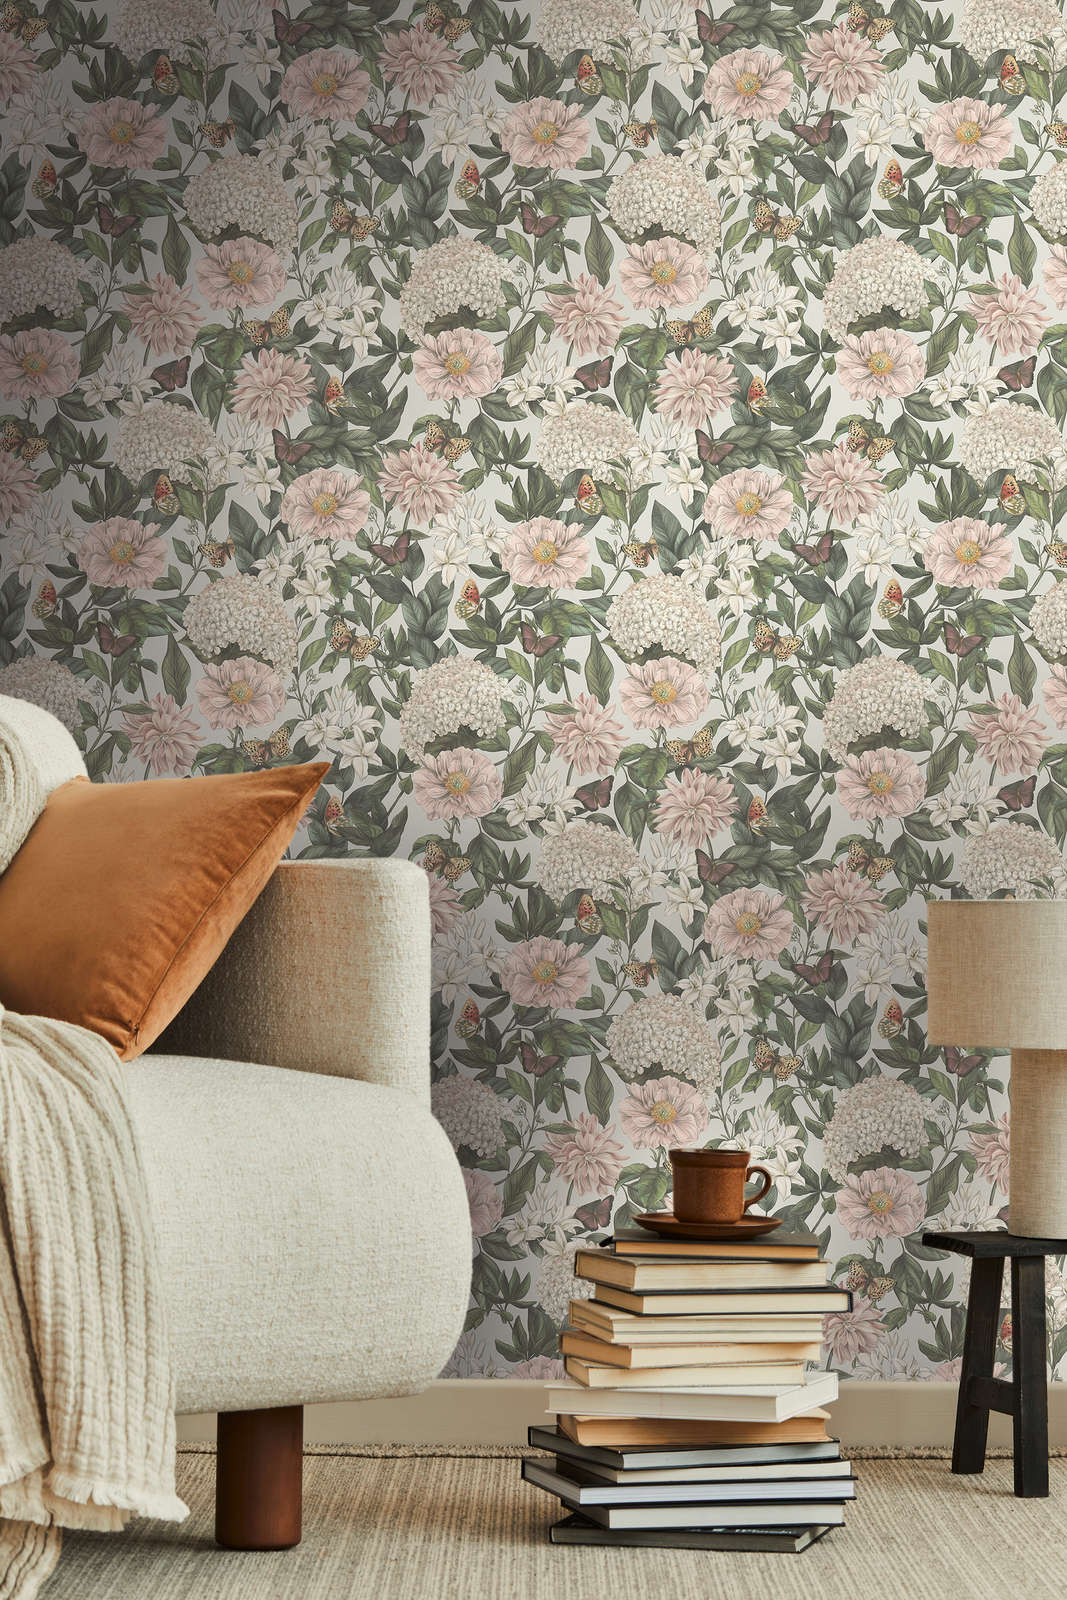             Modern wallpaper floral with animals & flowers textured matt - light grey, white, dark green
        